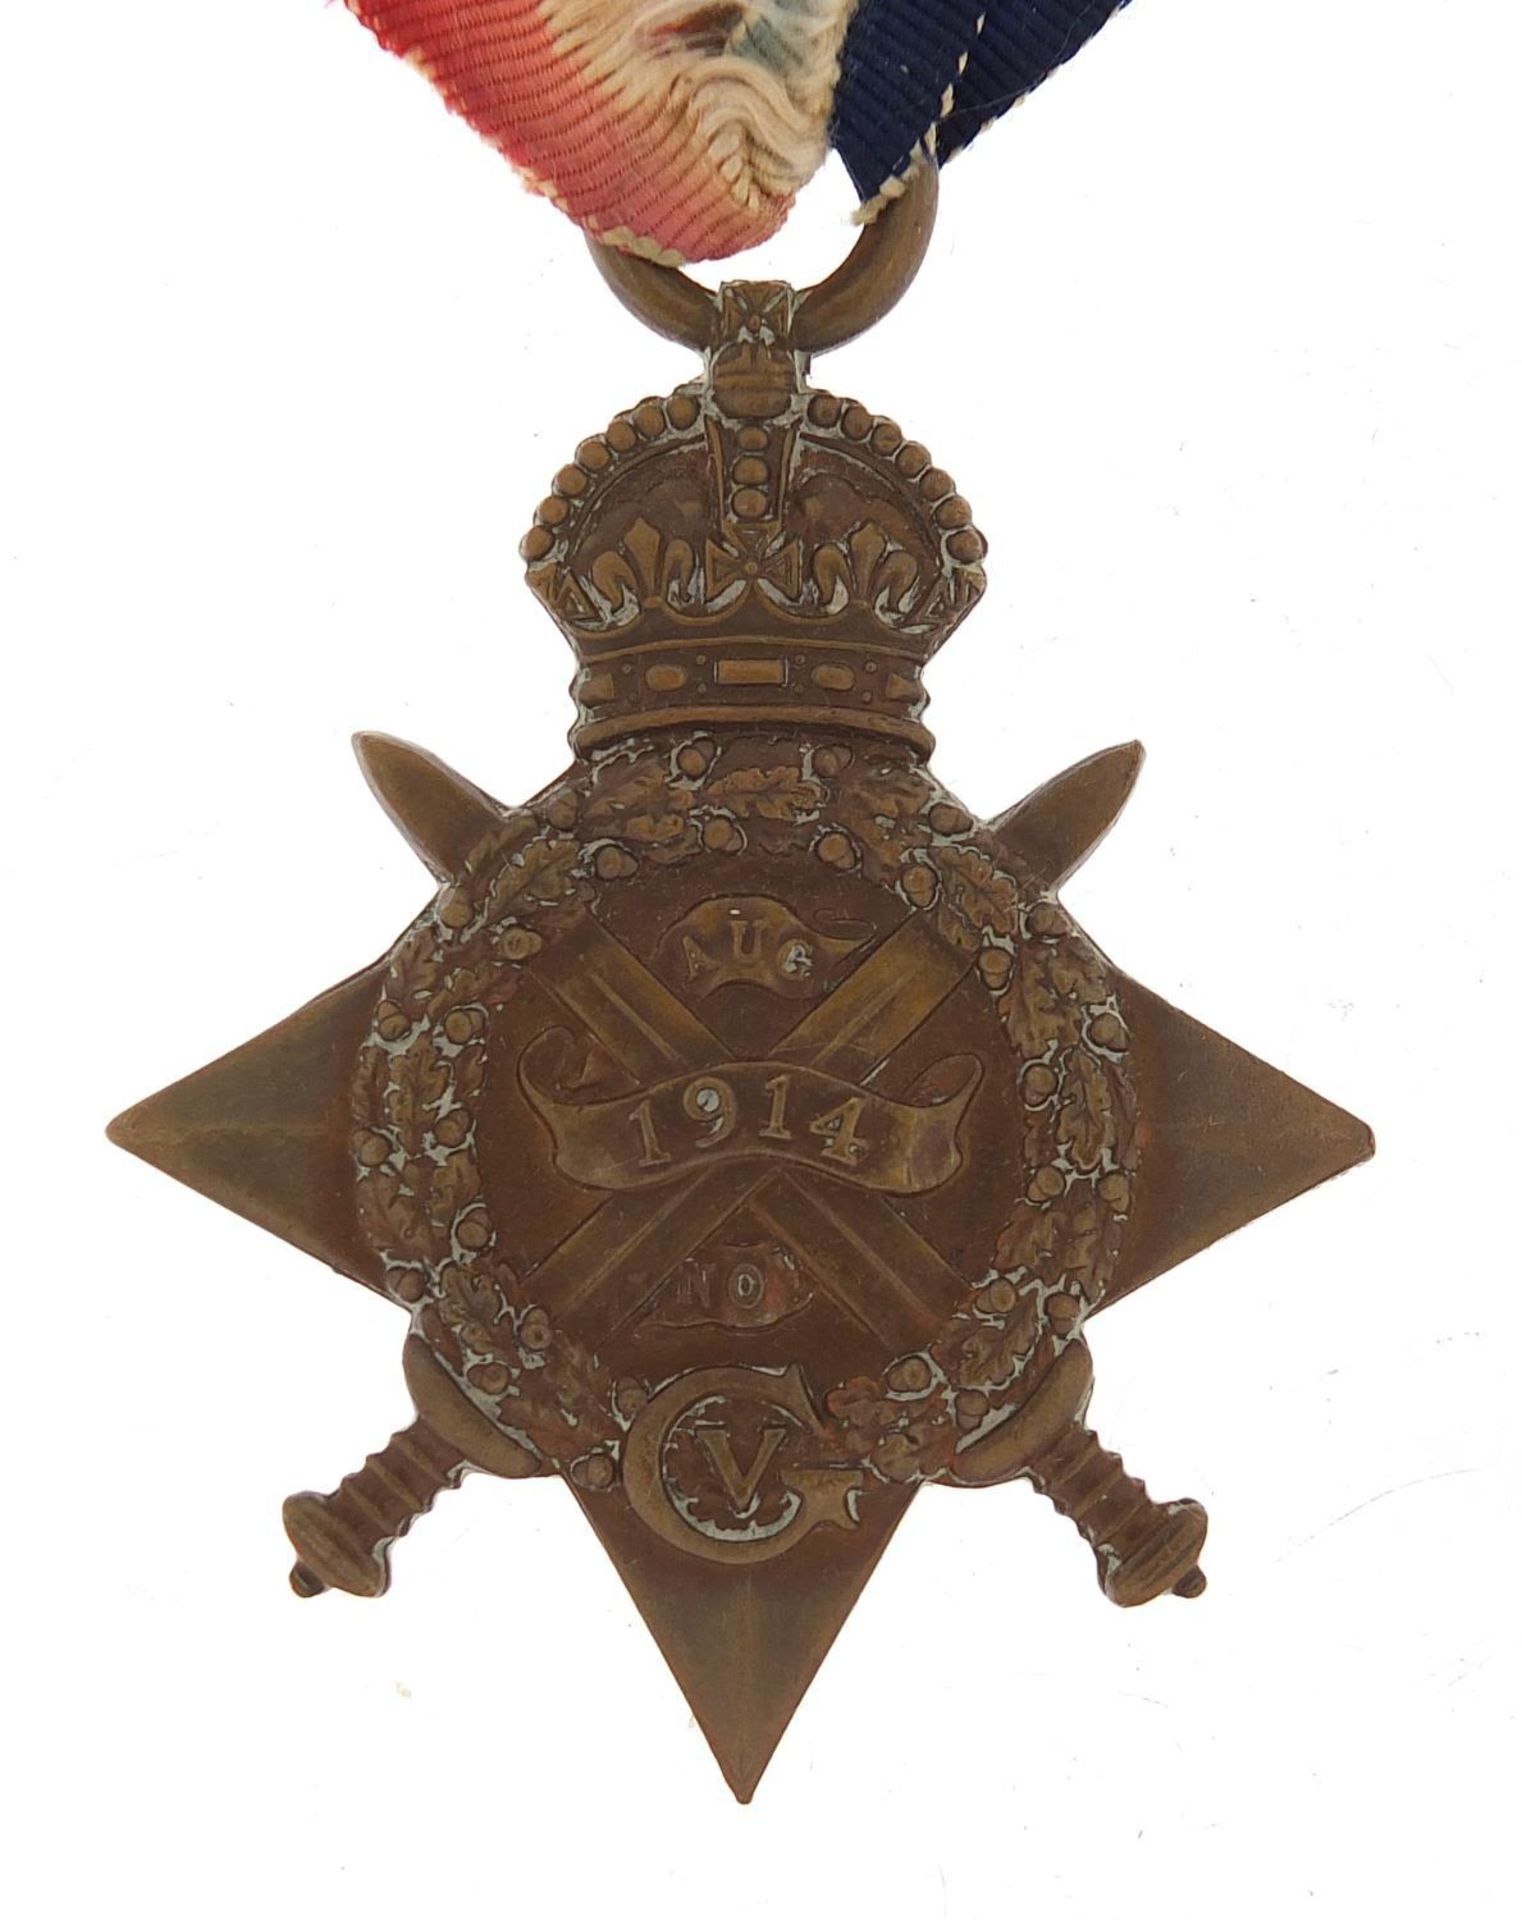 British military World War I Mons Star awarded to J.10456.C.H.COX,A.B.ARMD.TRAINS